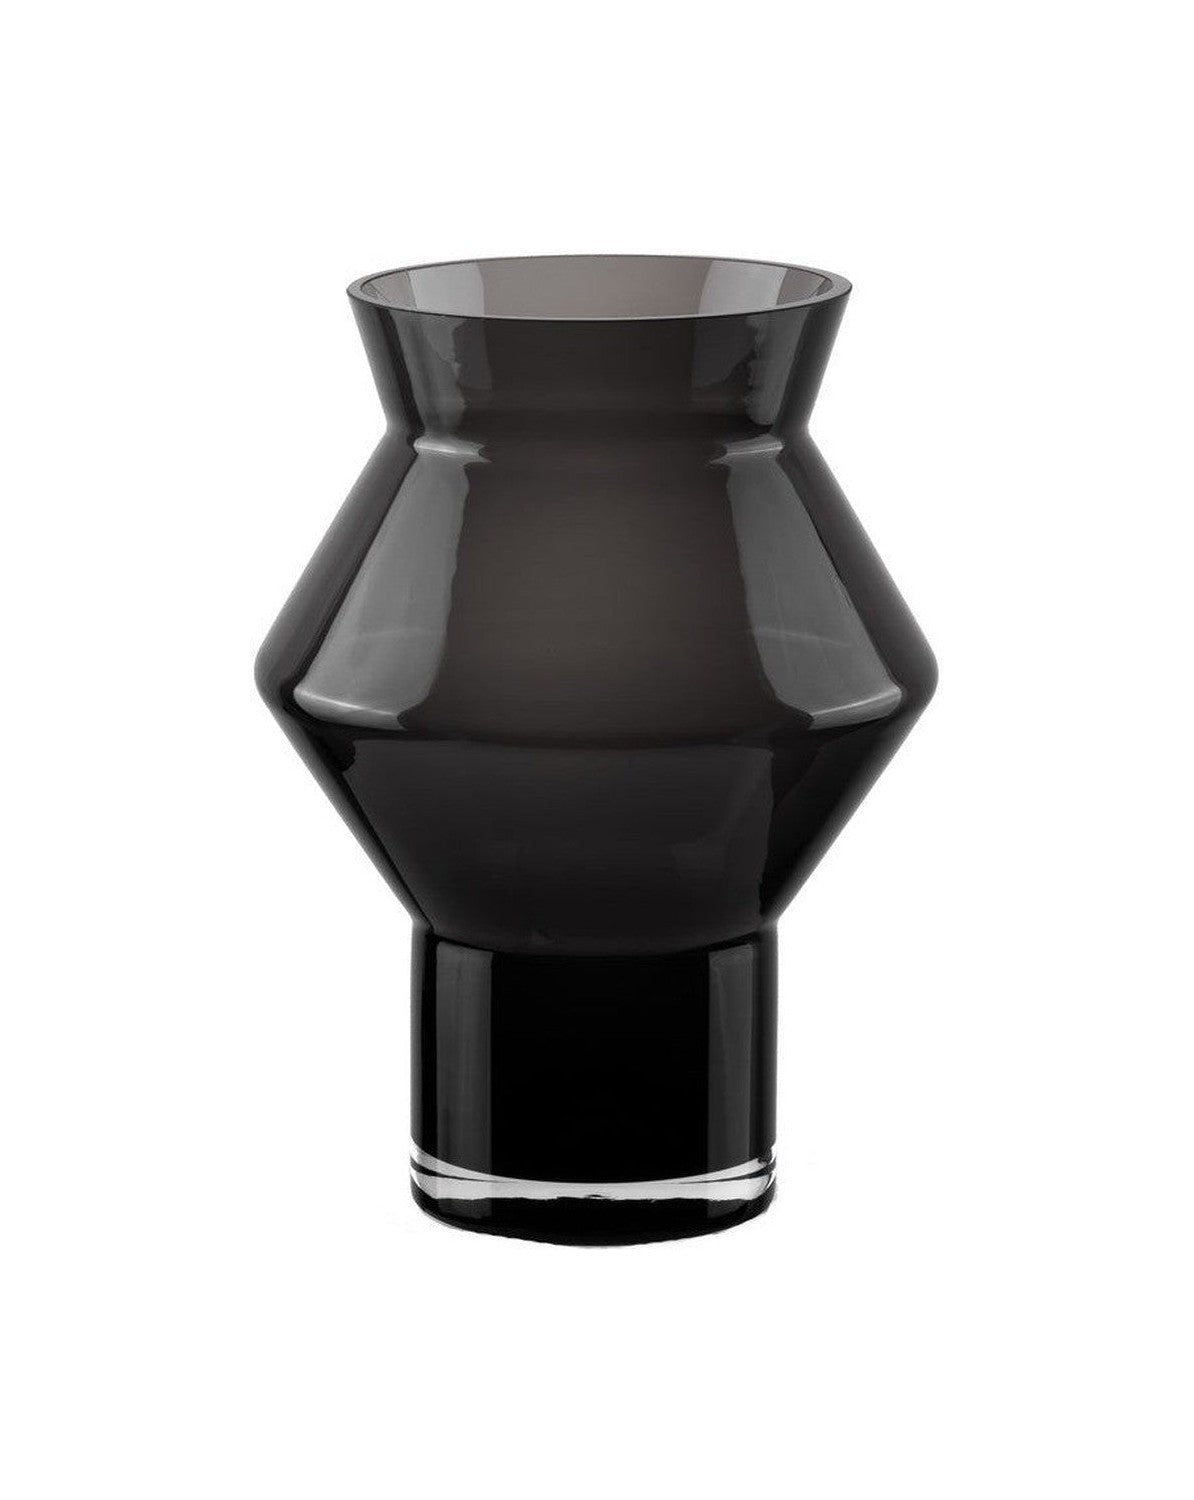 Design vase with jaggy angular cylindrical shape, dark gray high